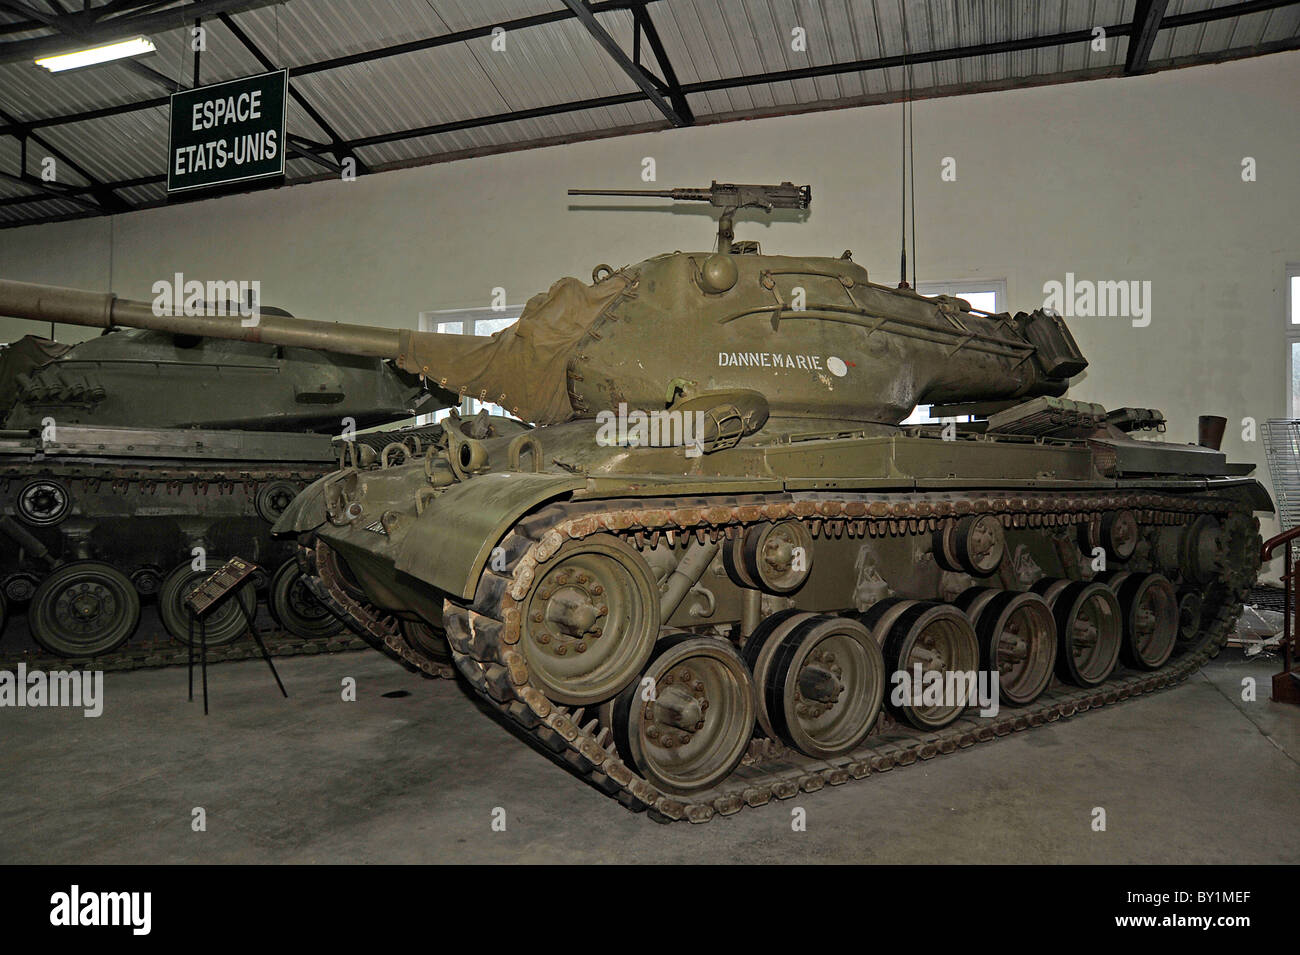 WW2 American tank on display at Saumur France Stock Photo